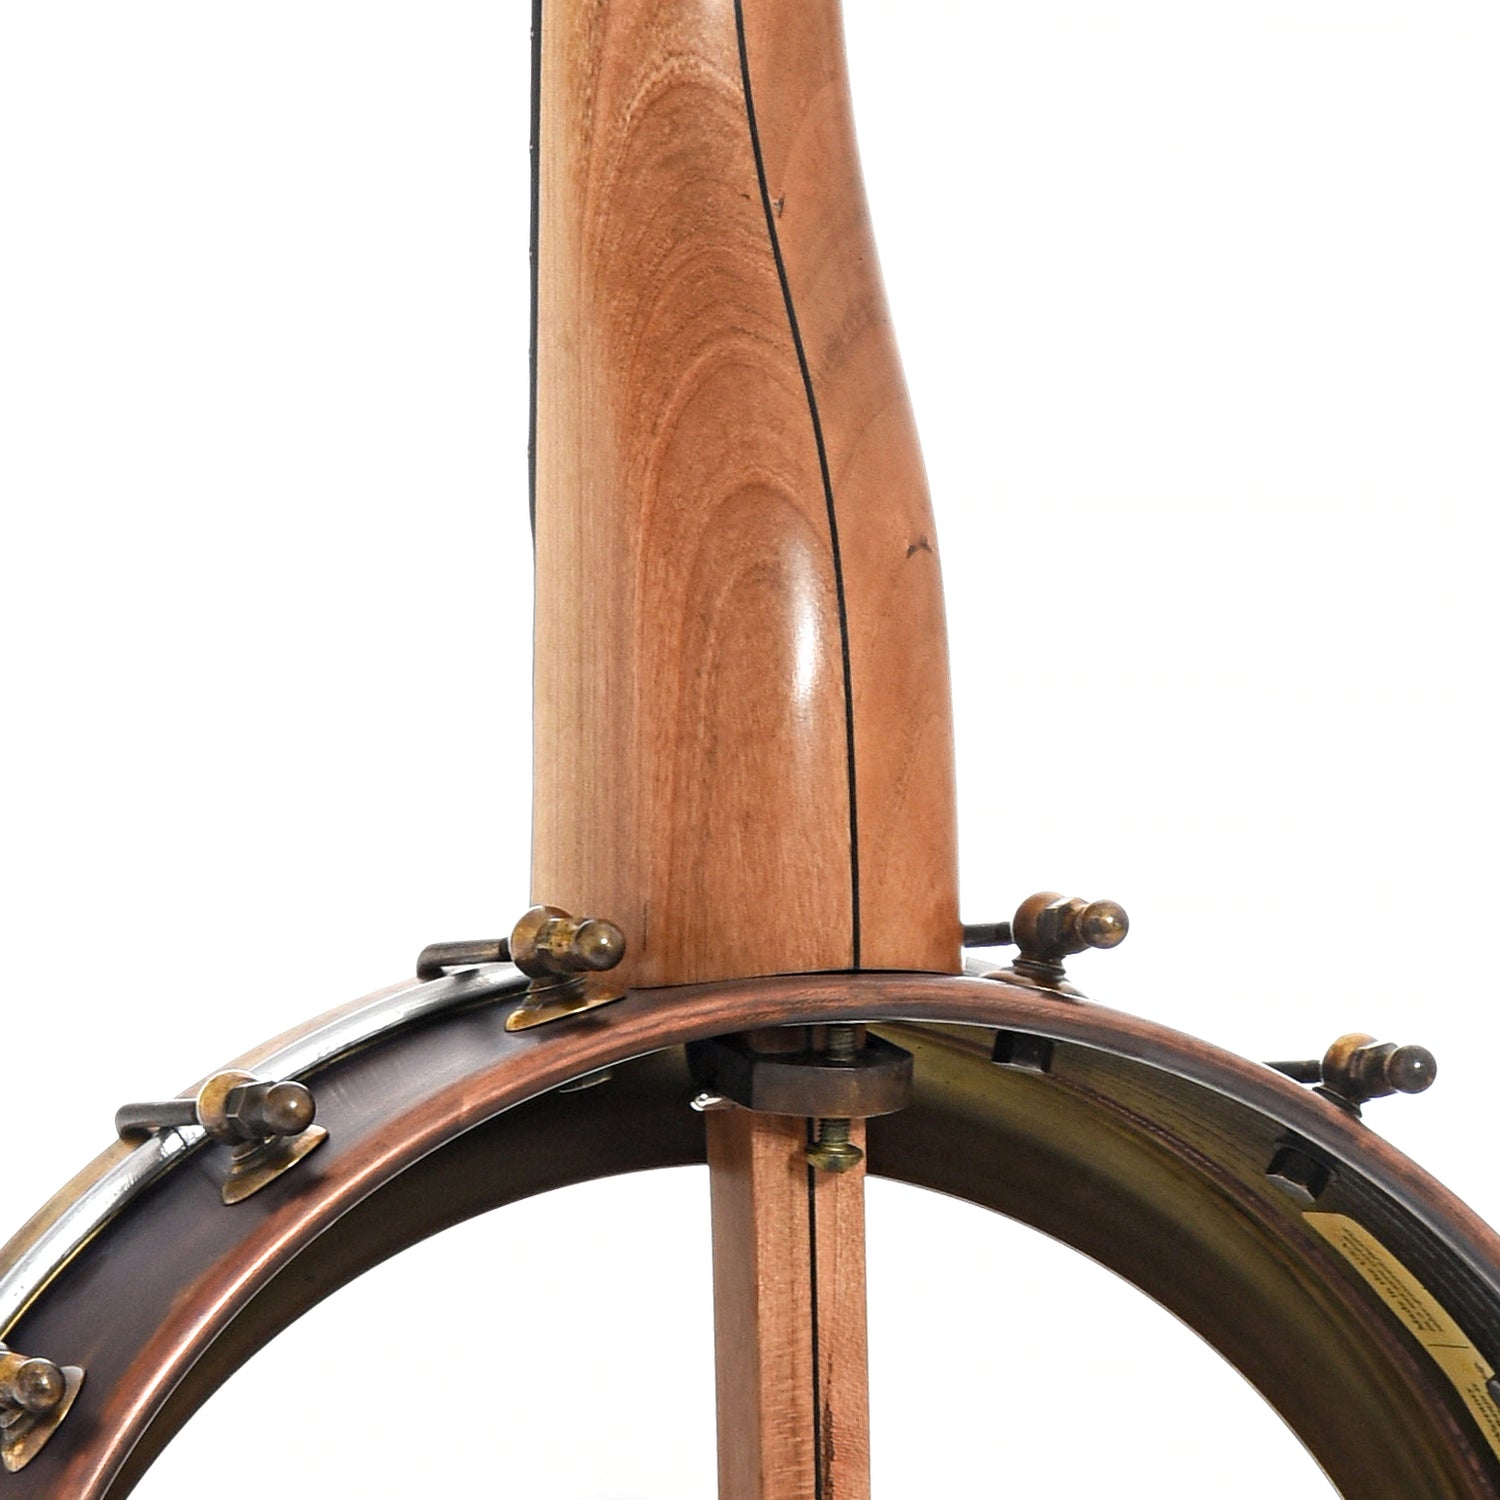 Heel of Pisgah 12" Cherry Rambler Dobson Special Copper Openback Banjo